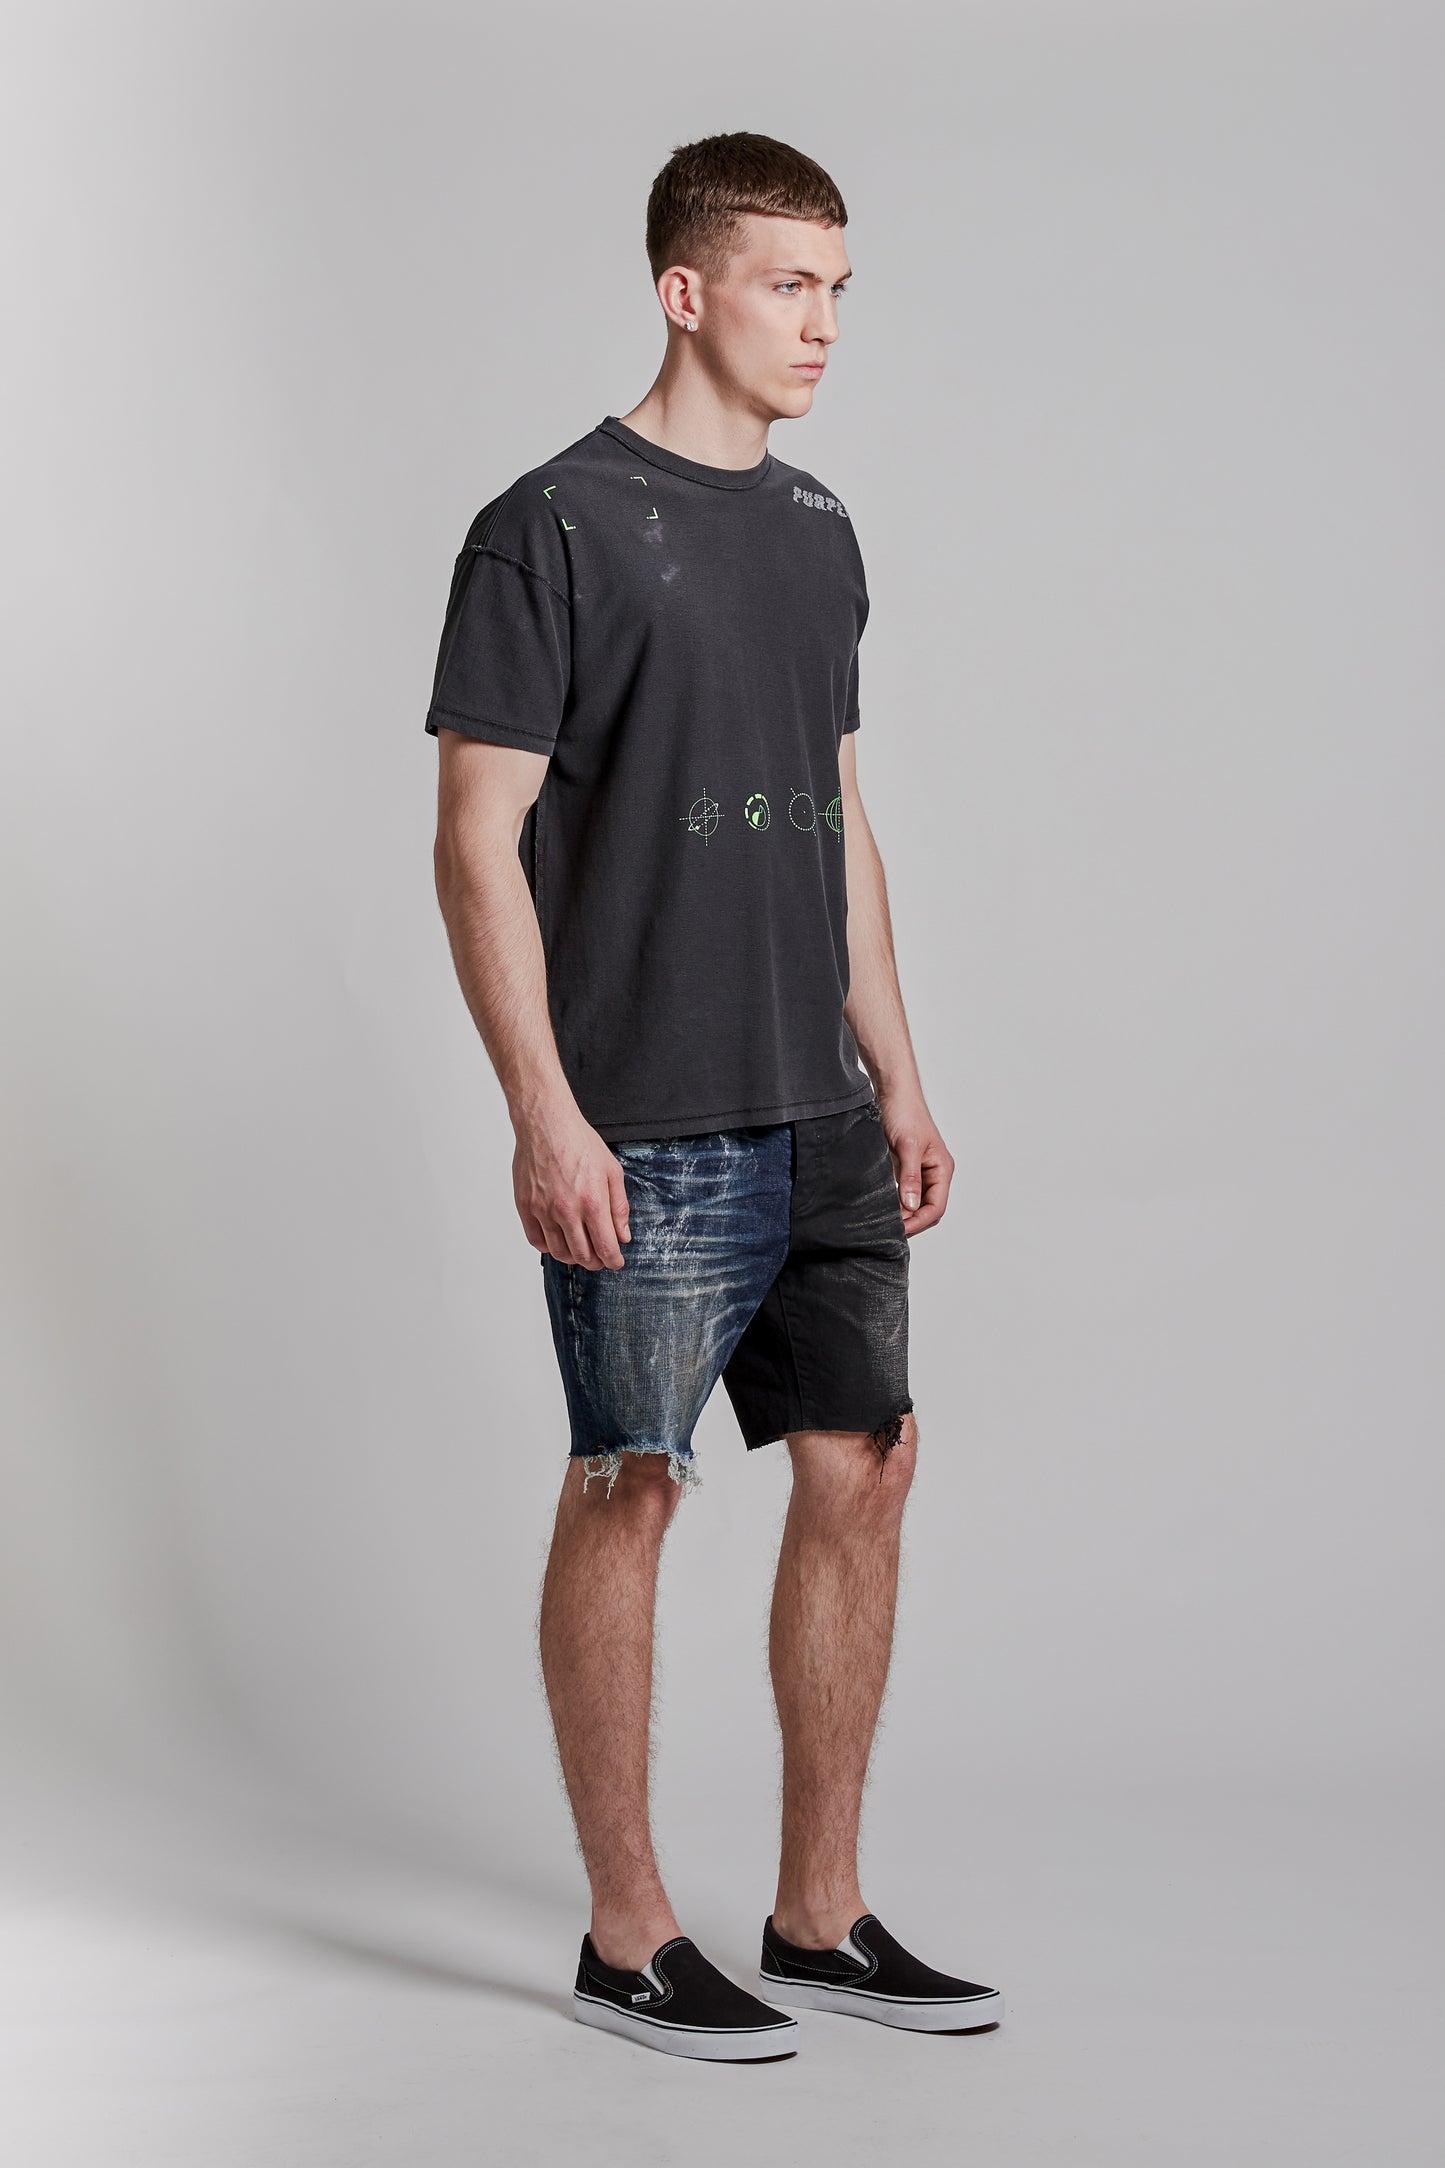 PURPLE BRAND - Men's Denim Jean Short - Mid Rise Short - Style No. P020 - Half and Half Short - Model Side Pose